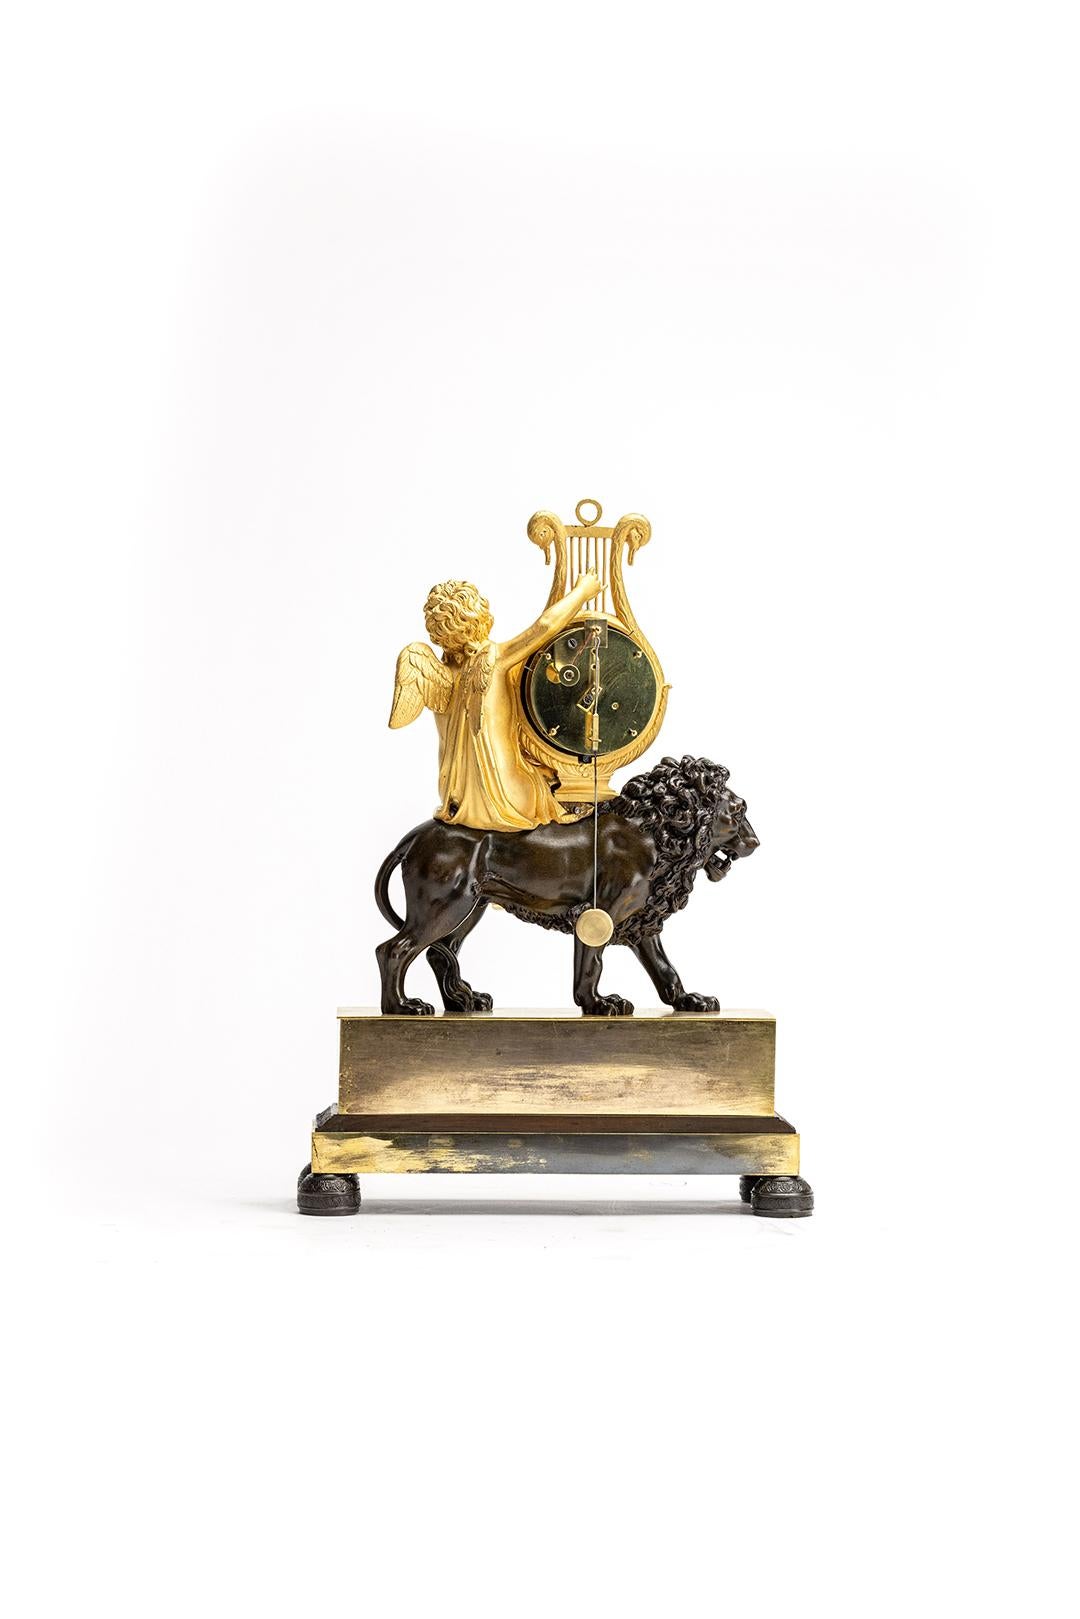 Gilt French Empire/CharlesX pendulum mantel clock  For Sale